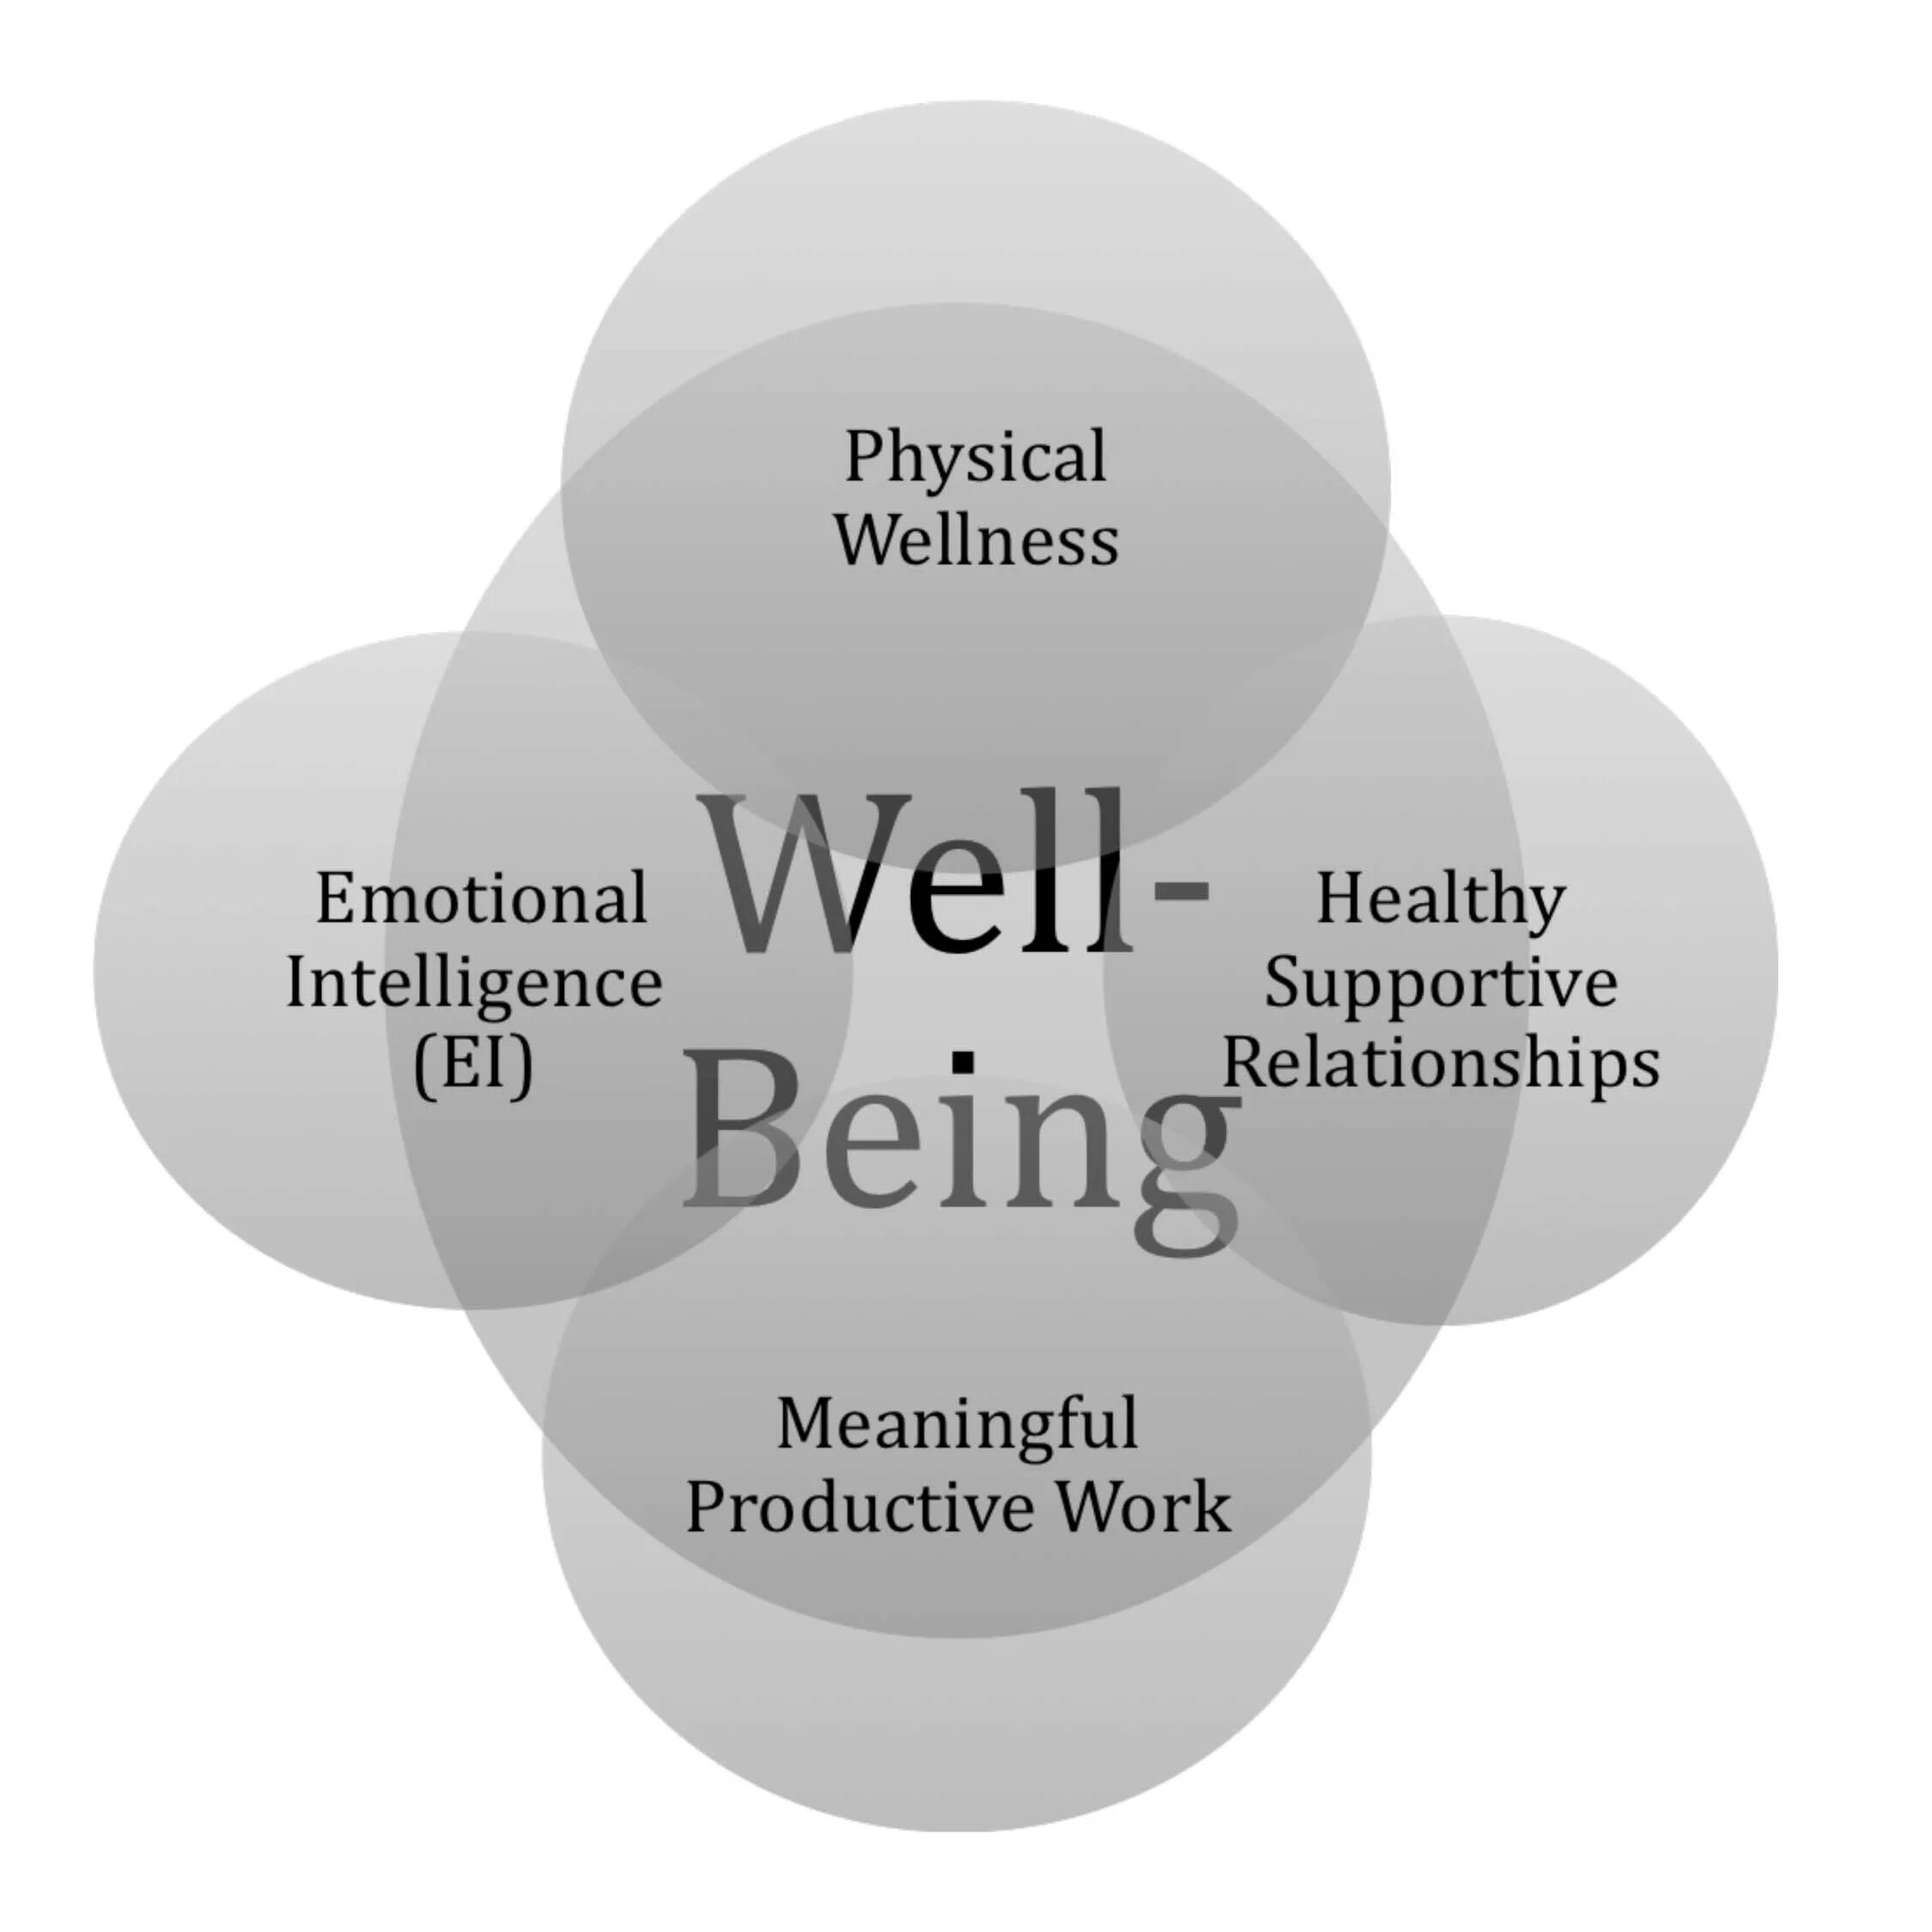 Better component. Система well being. Well being компоненты. Well being для сотрудников. Принципы Wellbeing.